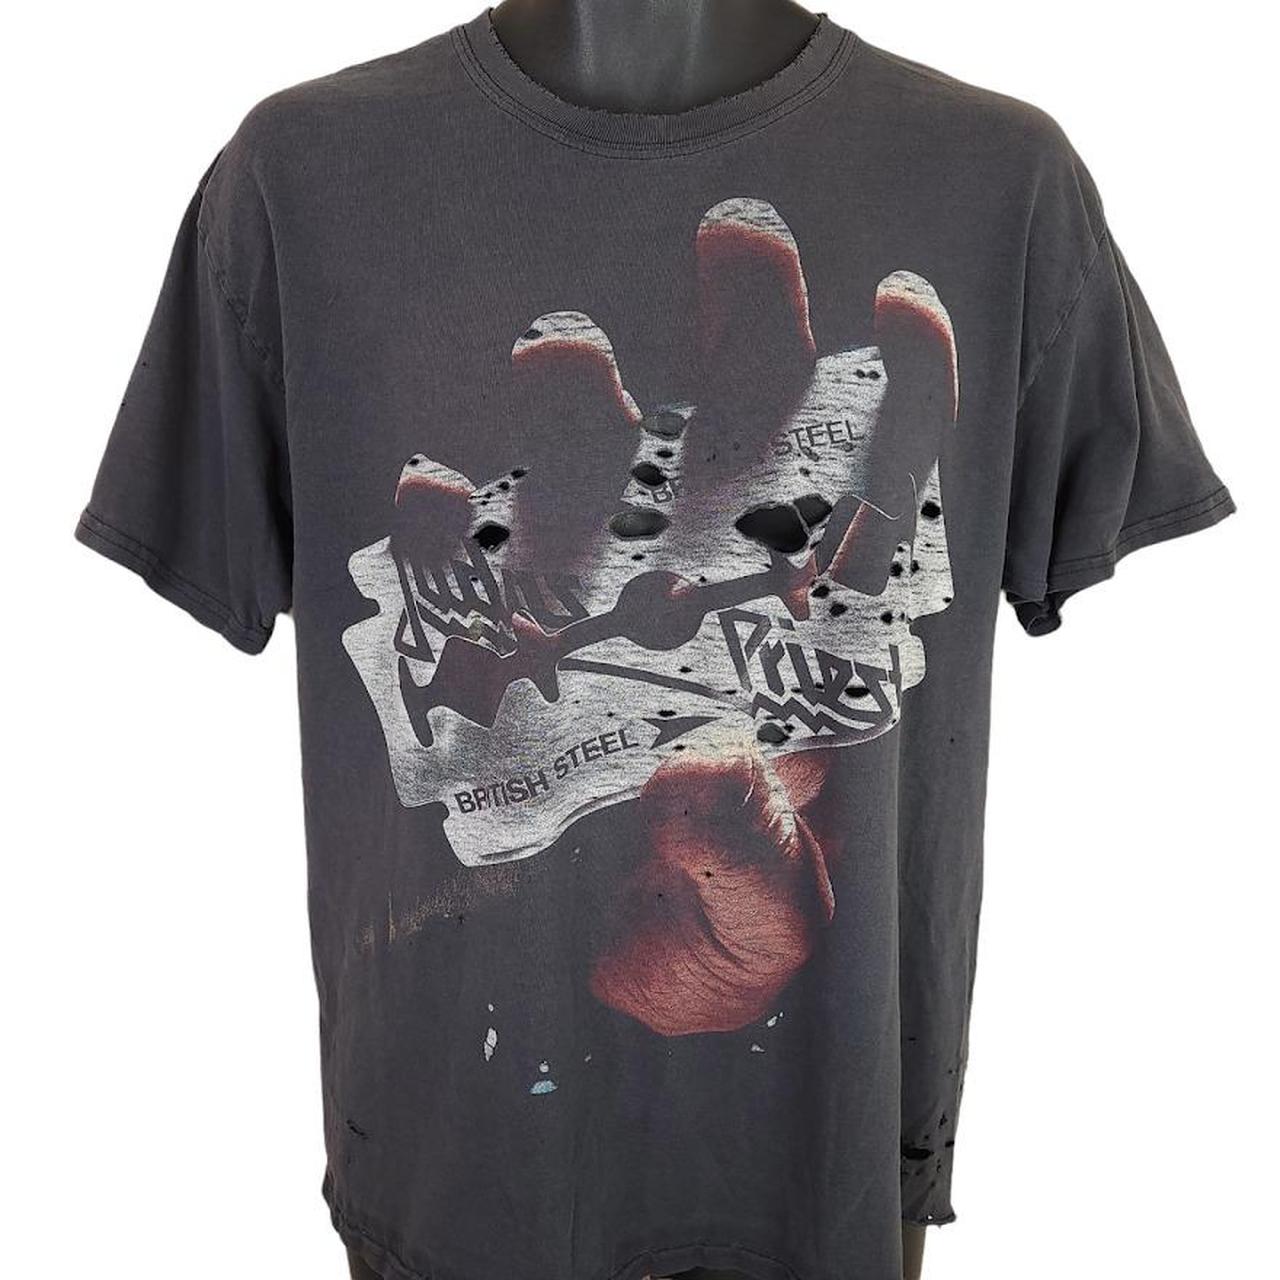 Product Image 2 - Judas Priest T Shirt Vintage